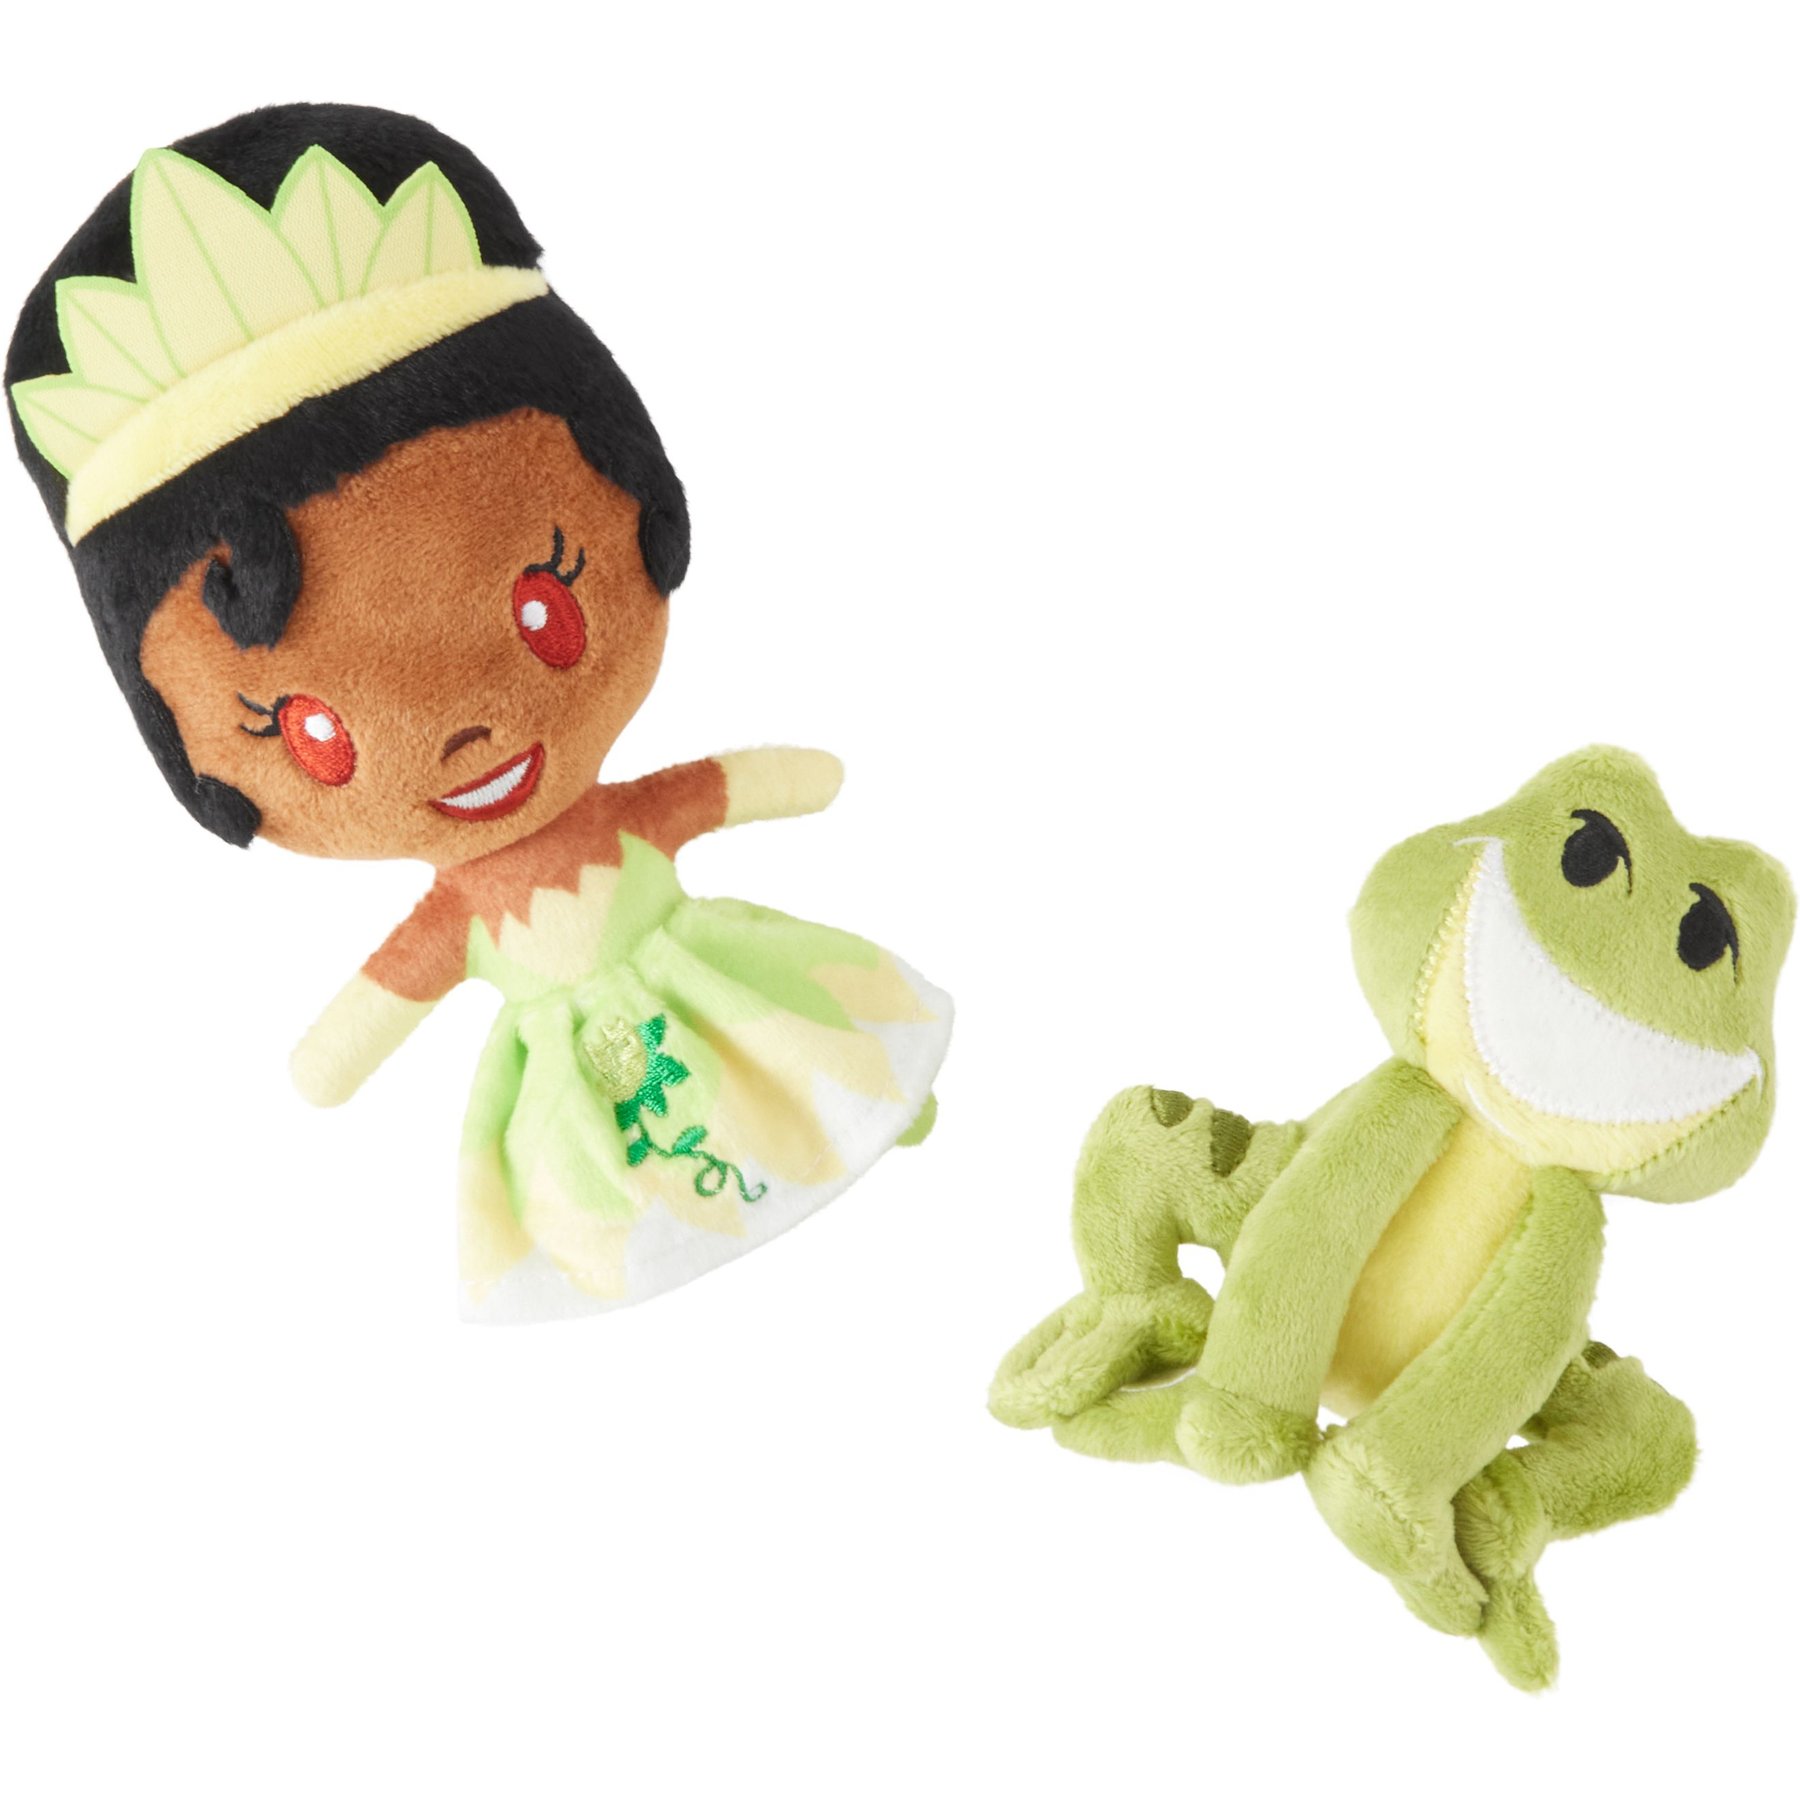 Disney Princess So Sweet Princess Tiana Plush Doll - Just Play